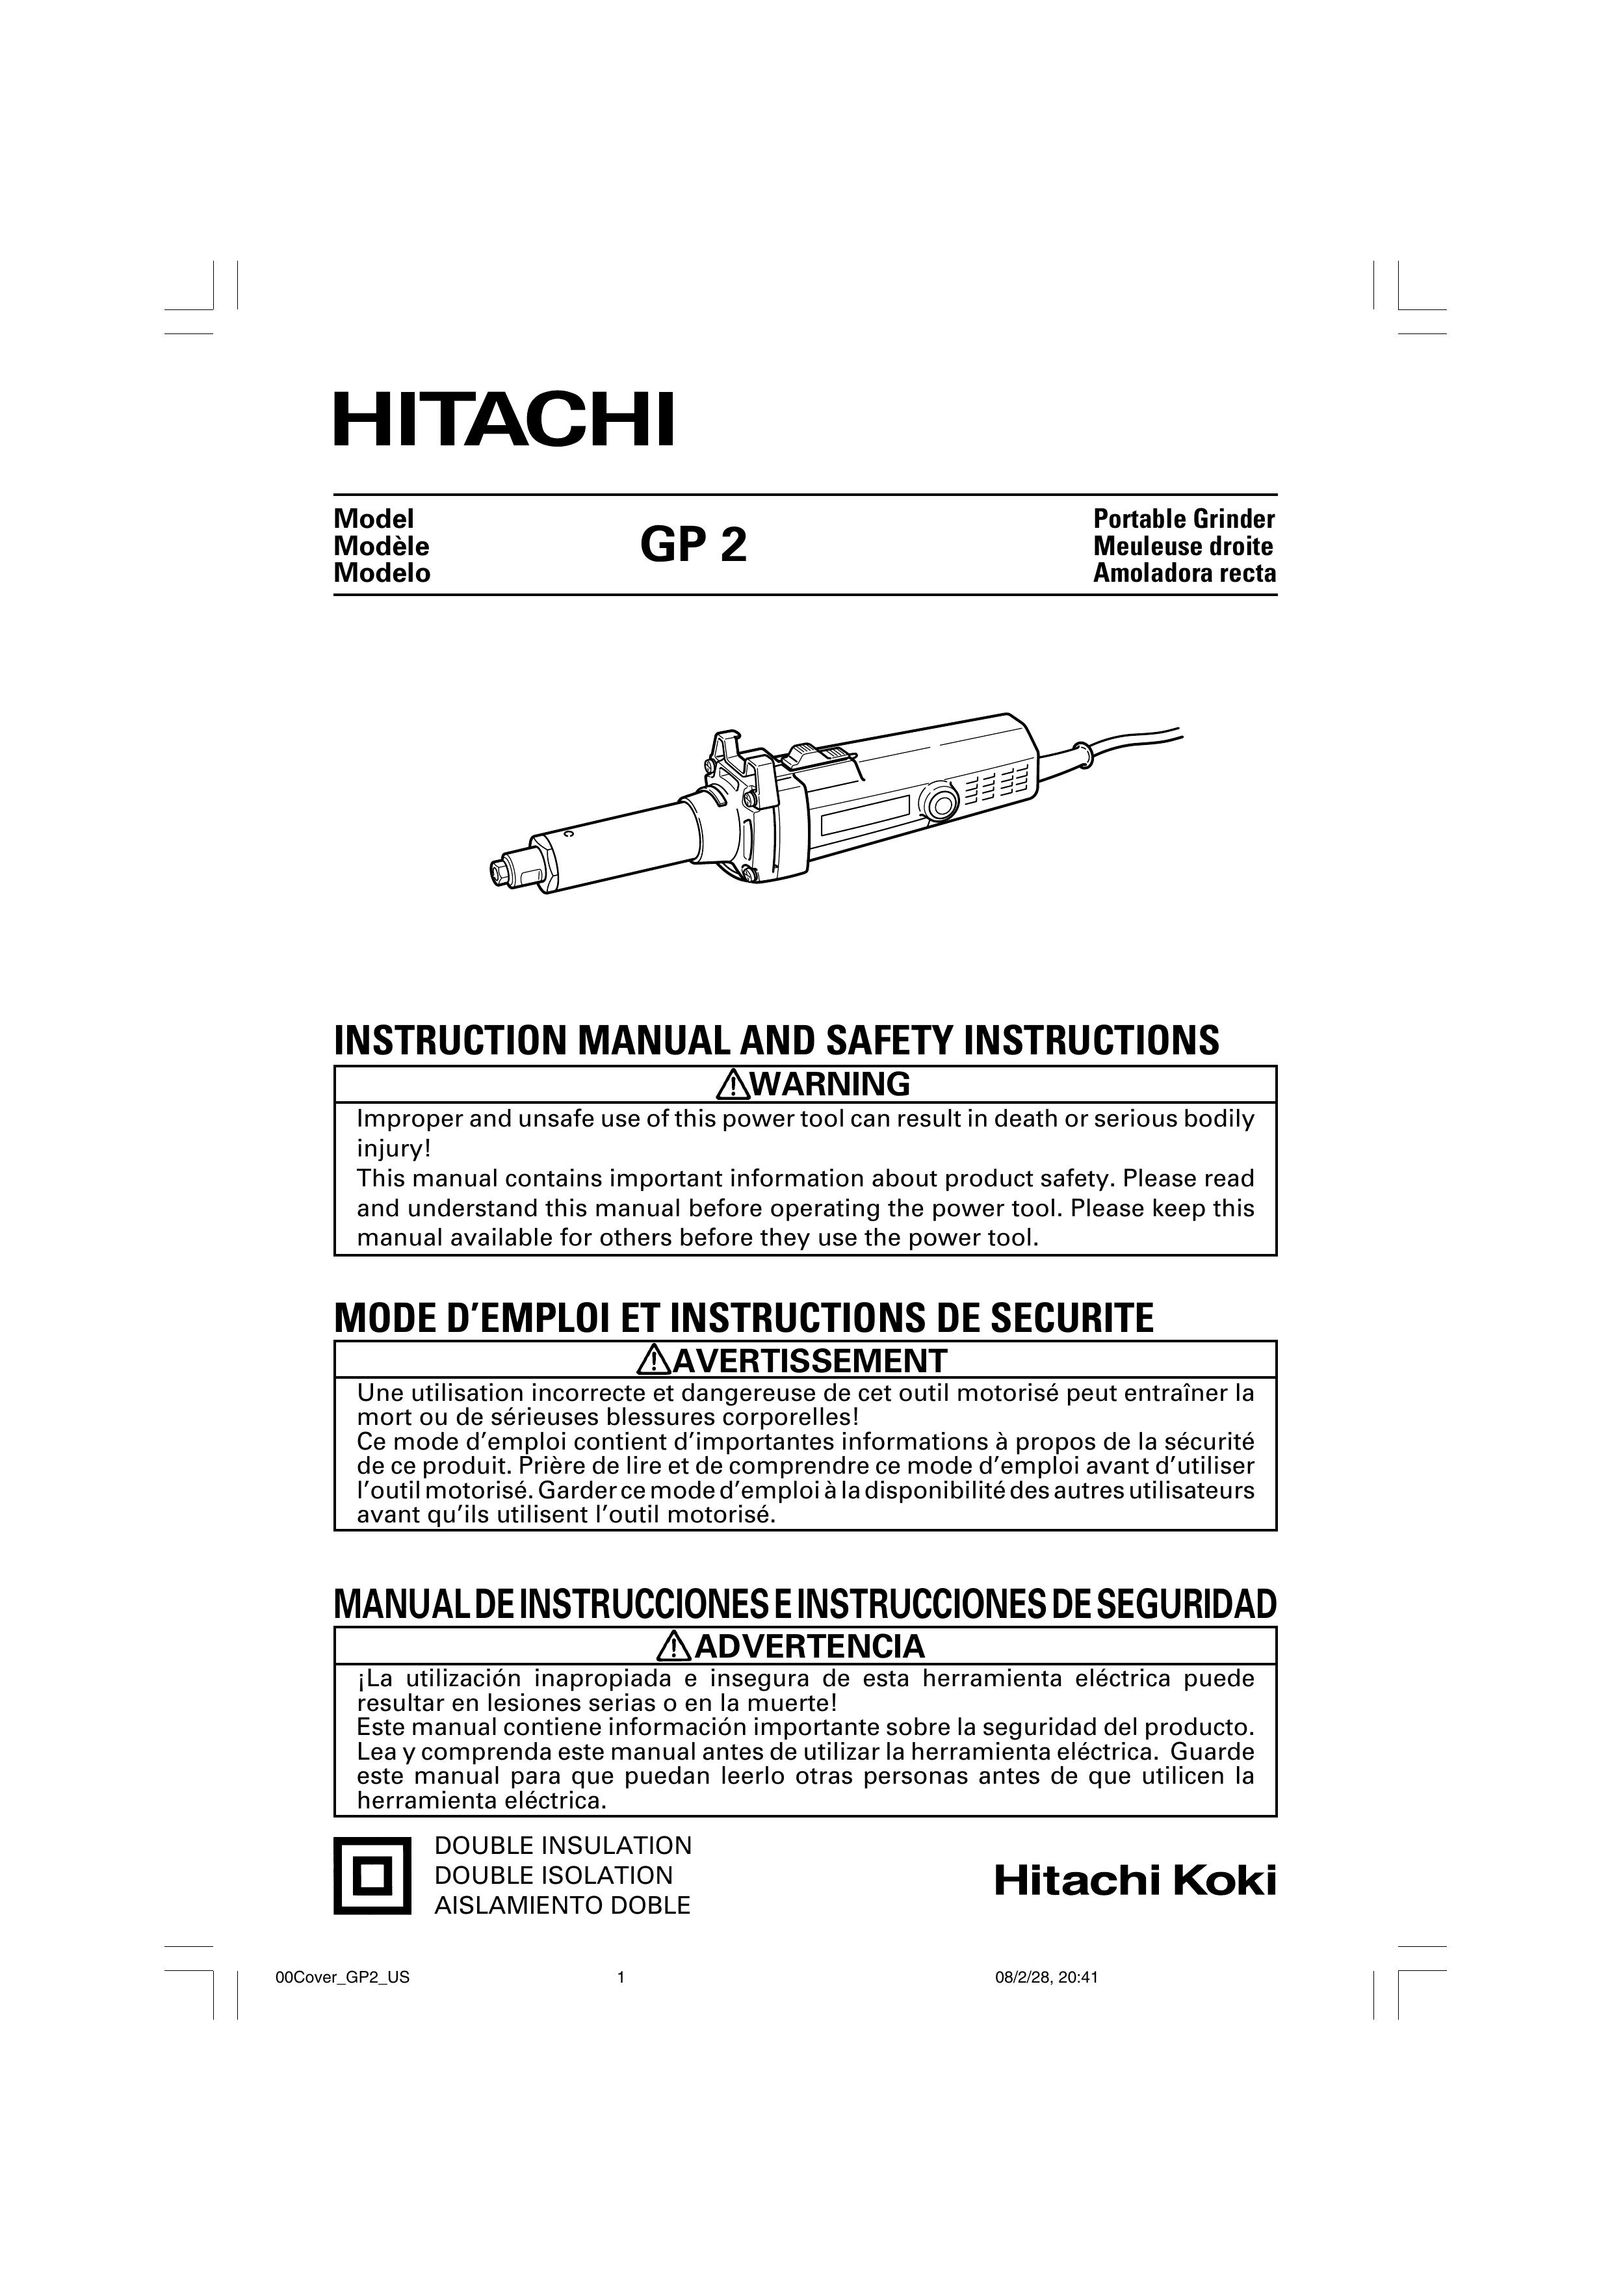 Hitachi GP 2 Grinder User Manual